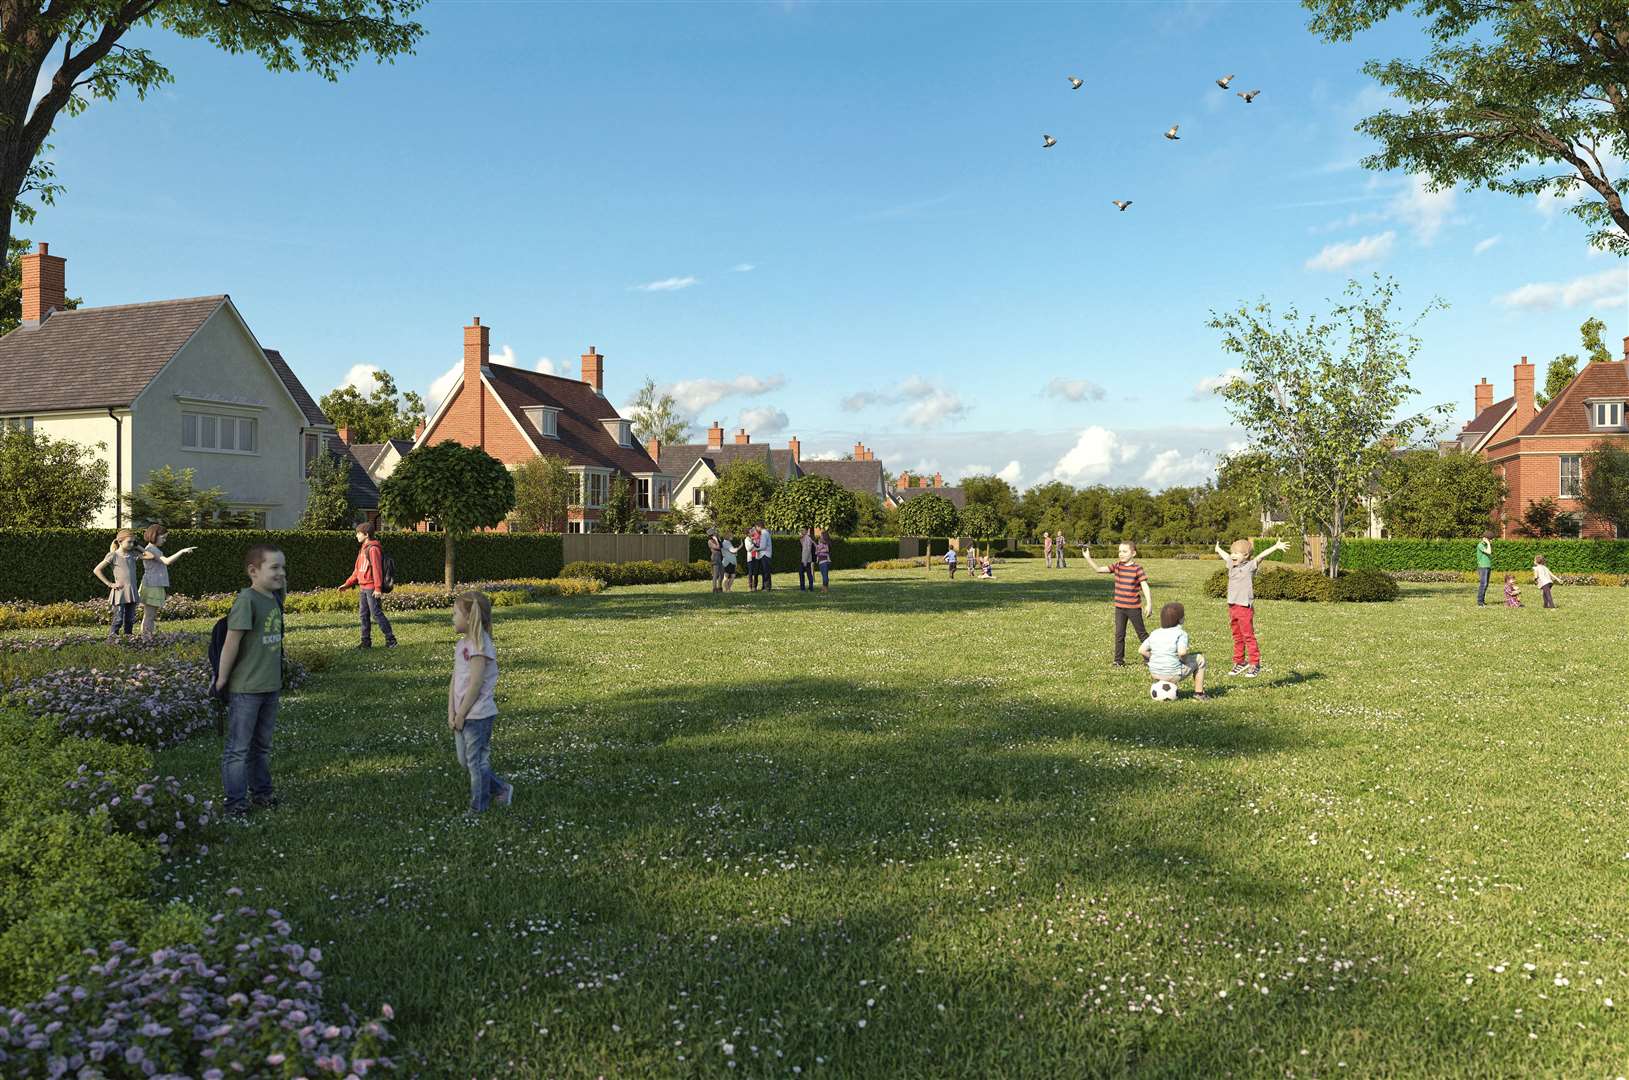 An artist's impression of what Binbury Park garden village could look like